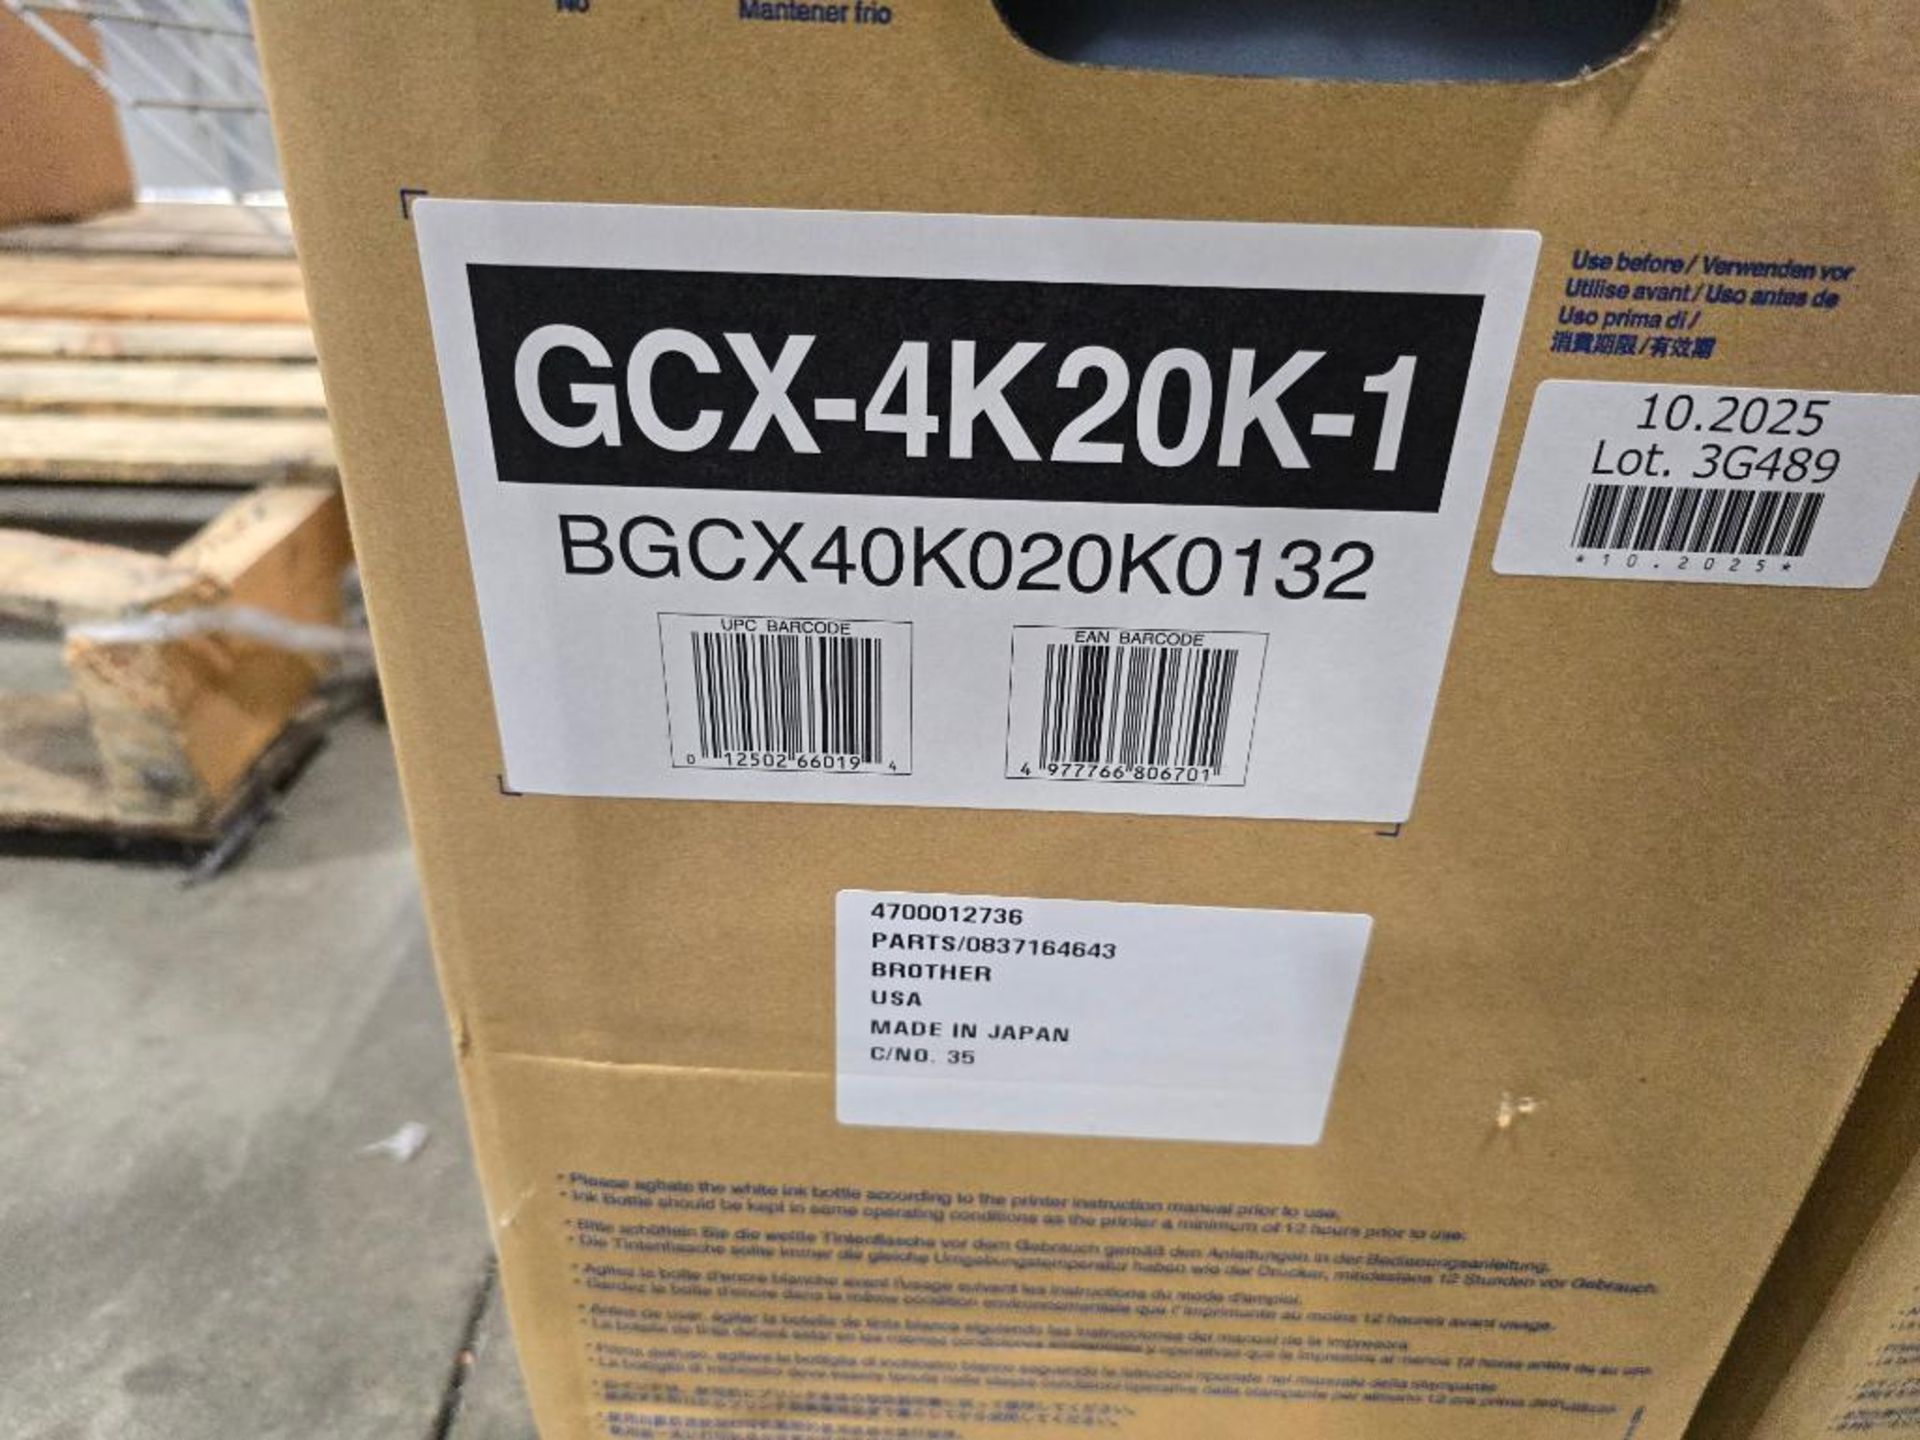 Brother GCX-4K20K-1 Black Ink, 18-Liter Container, Innobella Textile, GTX Pro/GTX600 Series - Image 3 of 3